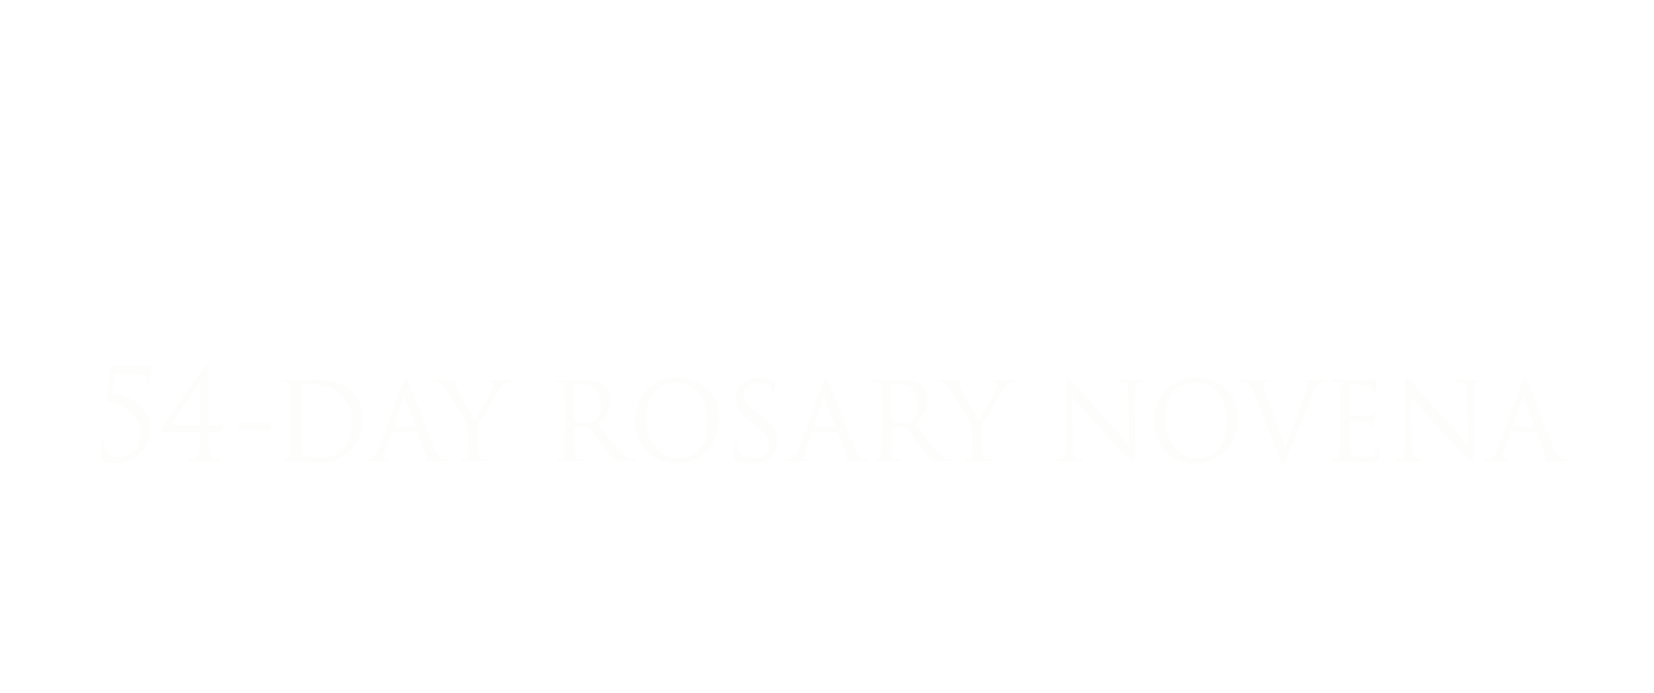 Fight Like Heaven 54-Day Rosary Novena Text FightLikeHeaven to 84576